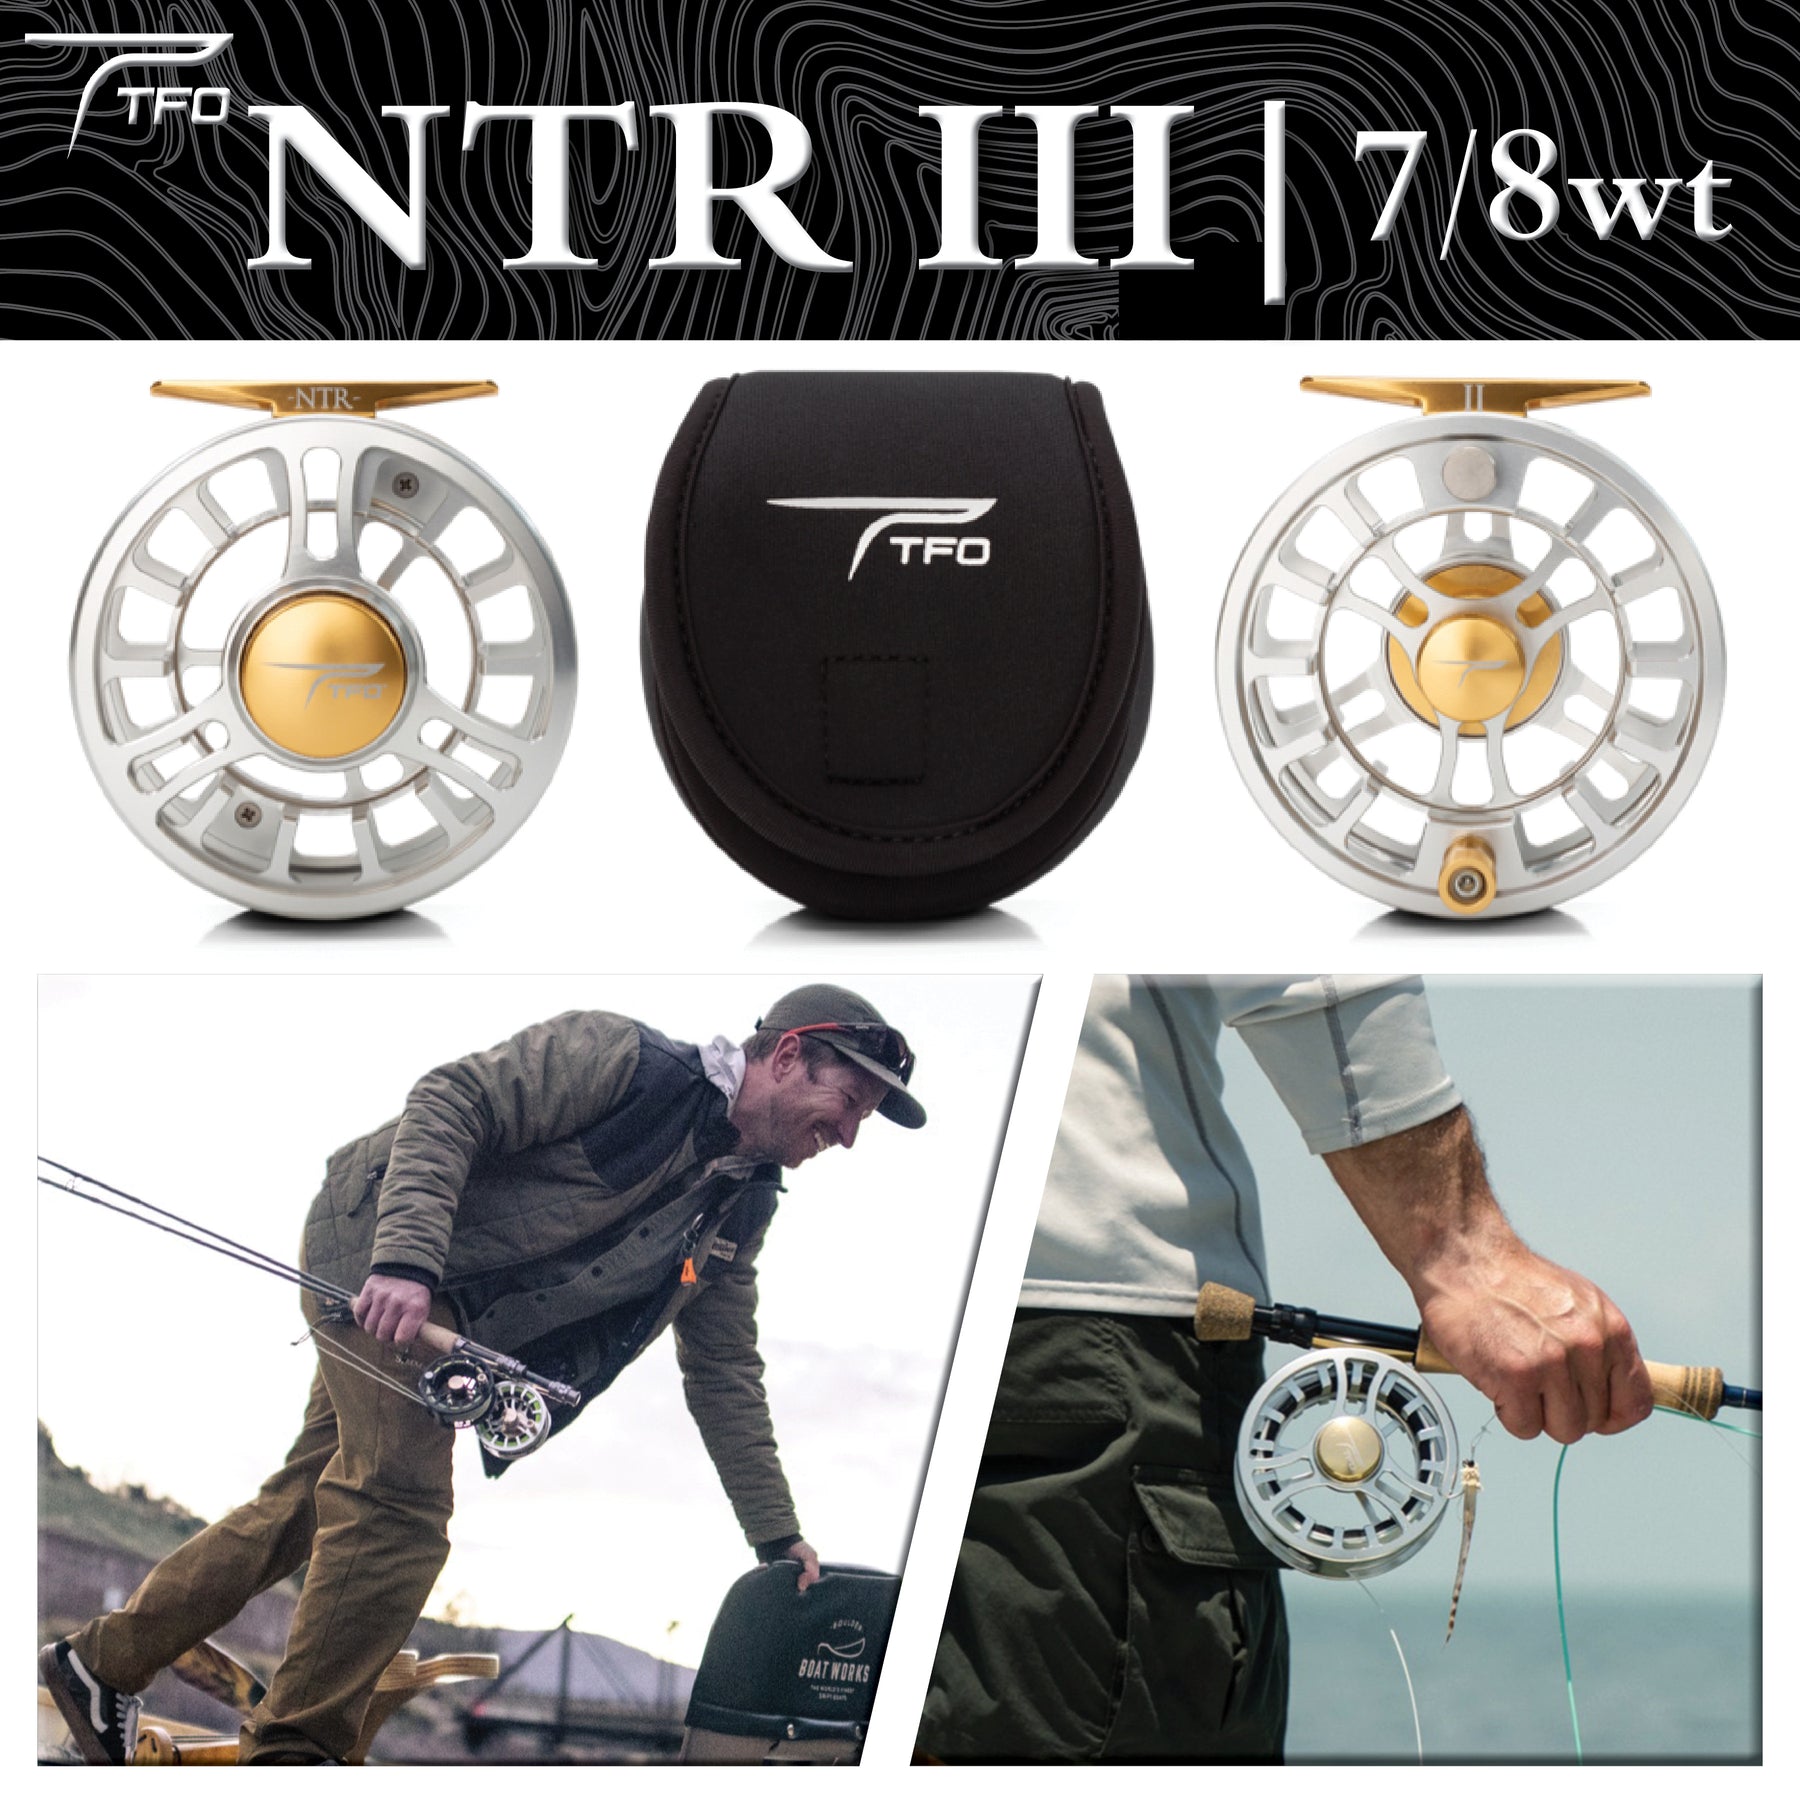 TFO TFR NTR III CG Silver 7/8wt Fly Reel – Raft & Fly Shop